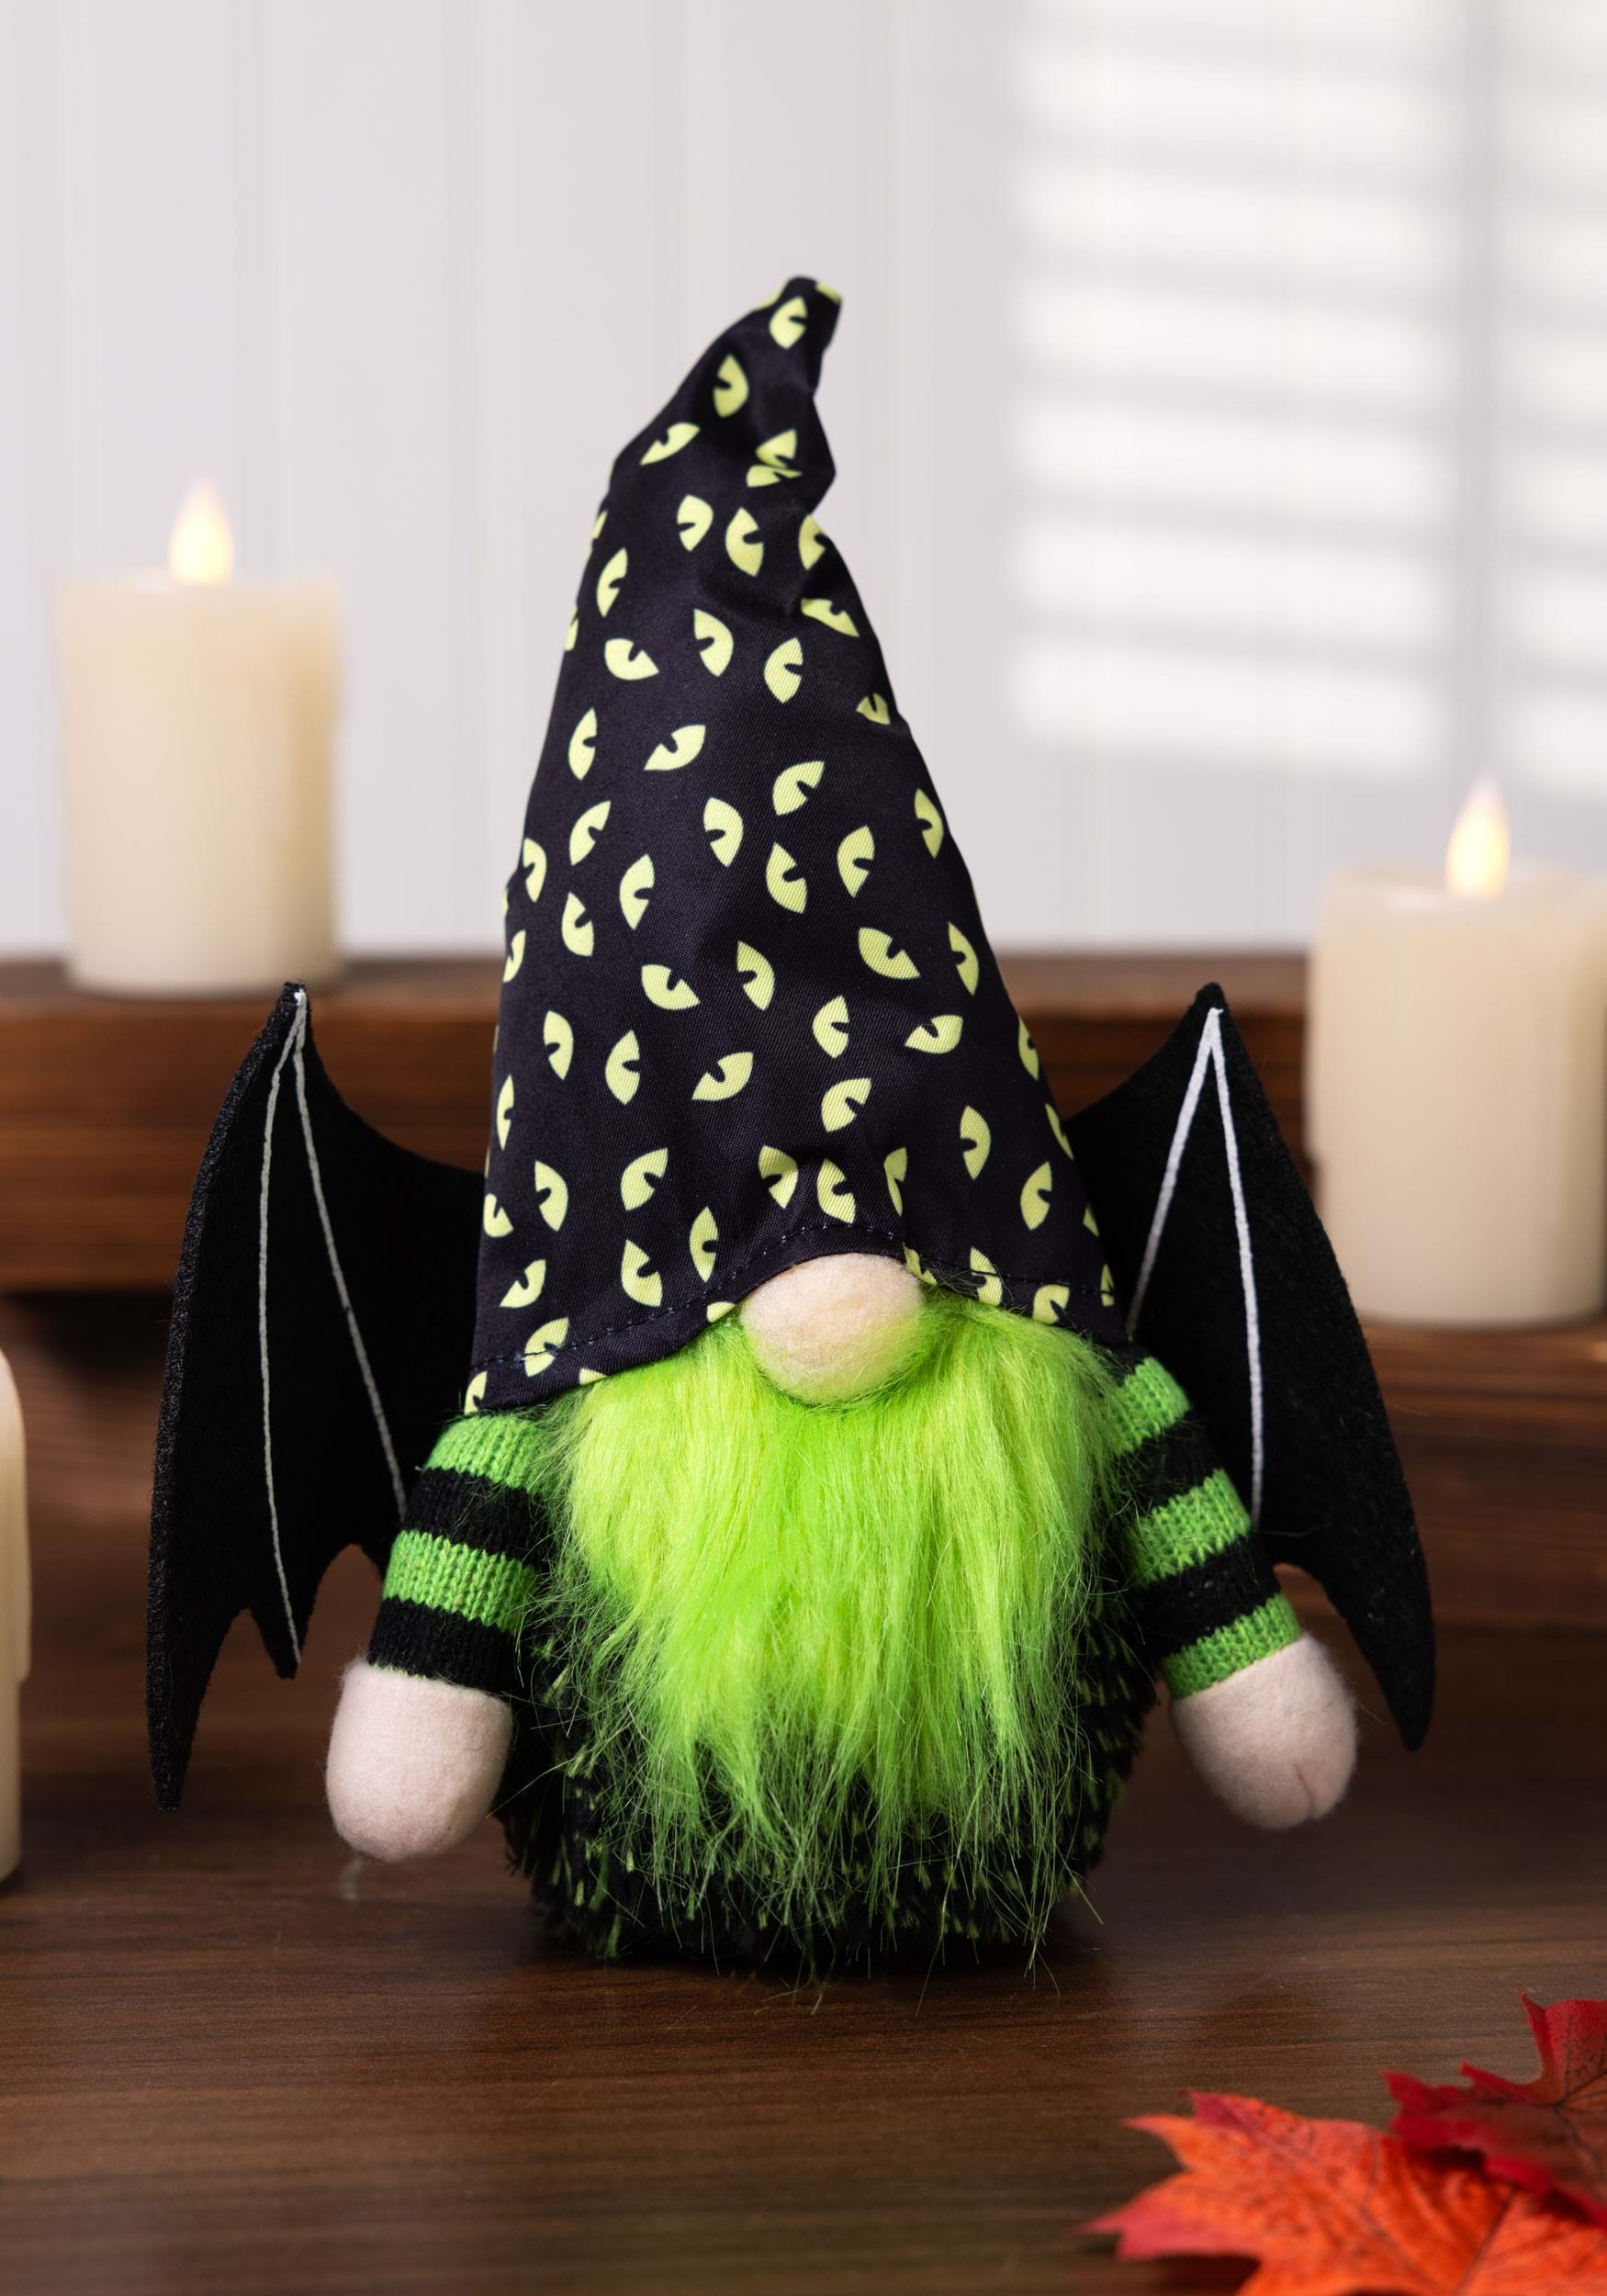 Green Bat Garden Gnome Halloween Decoration